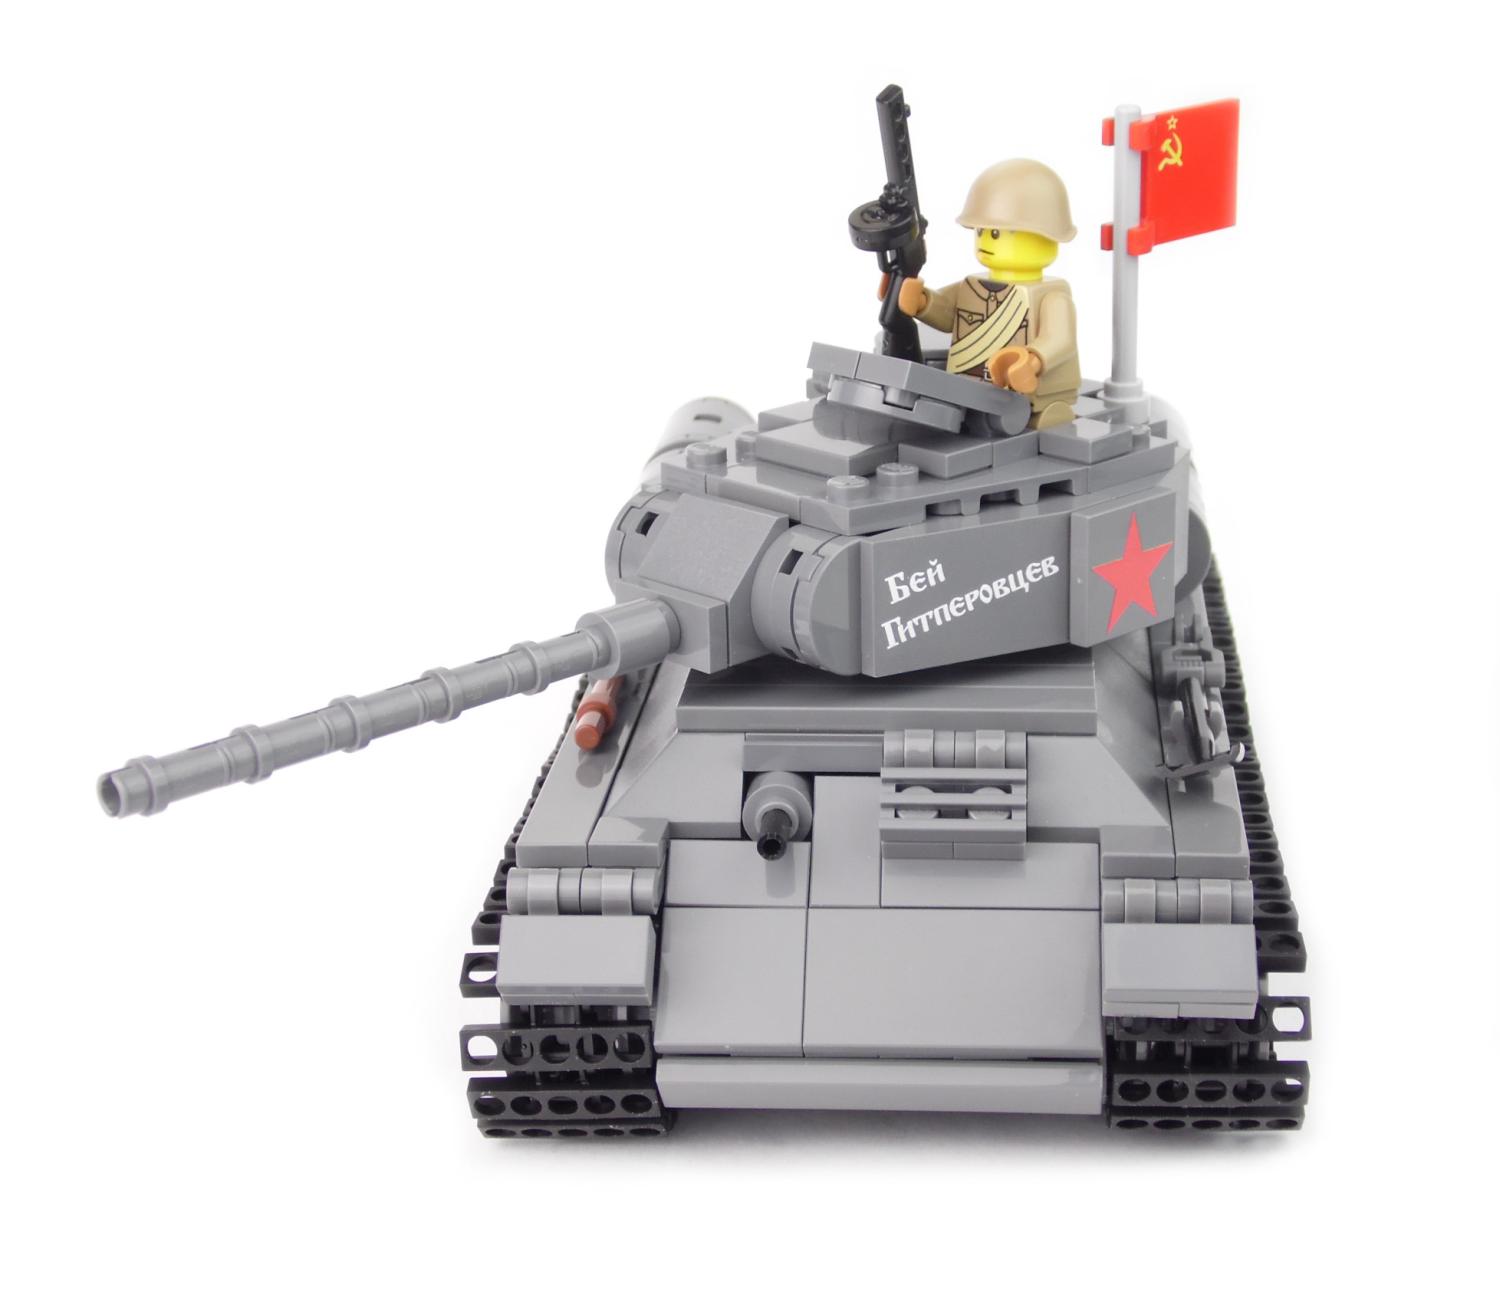 T34-85 Tank